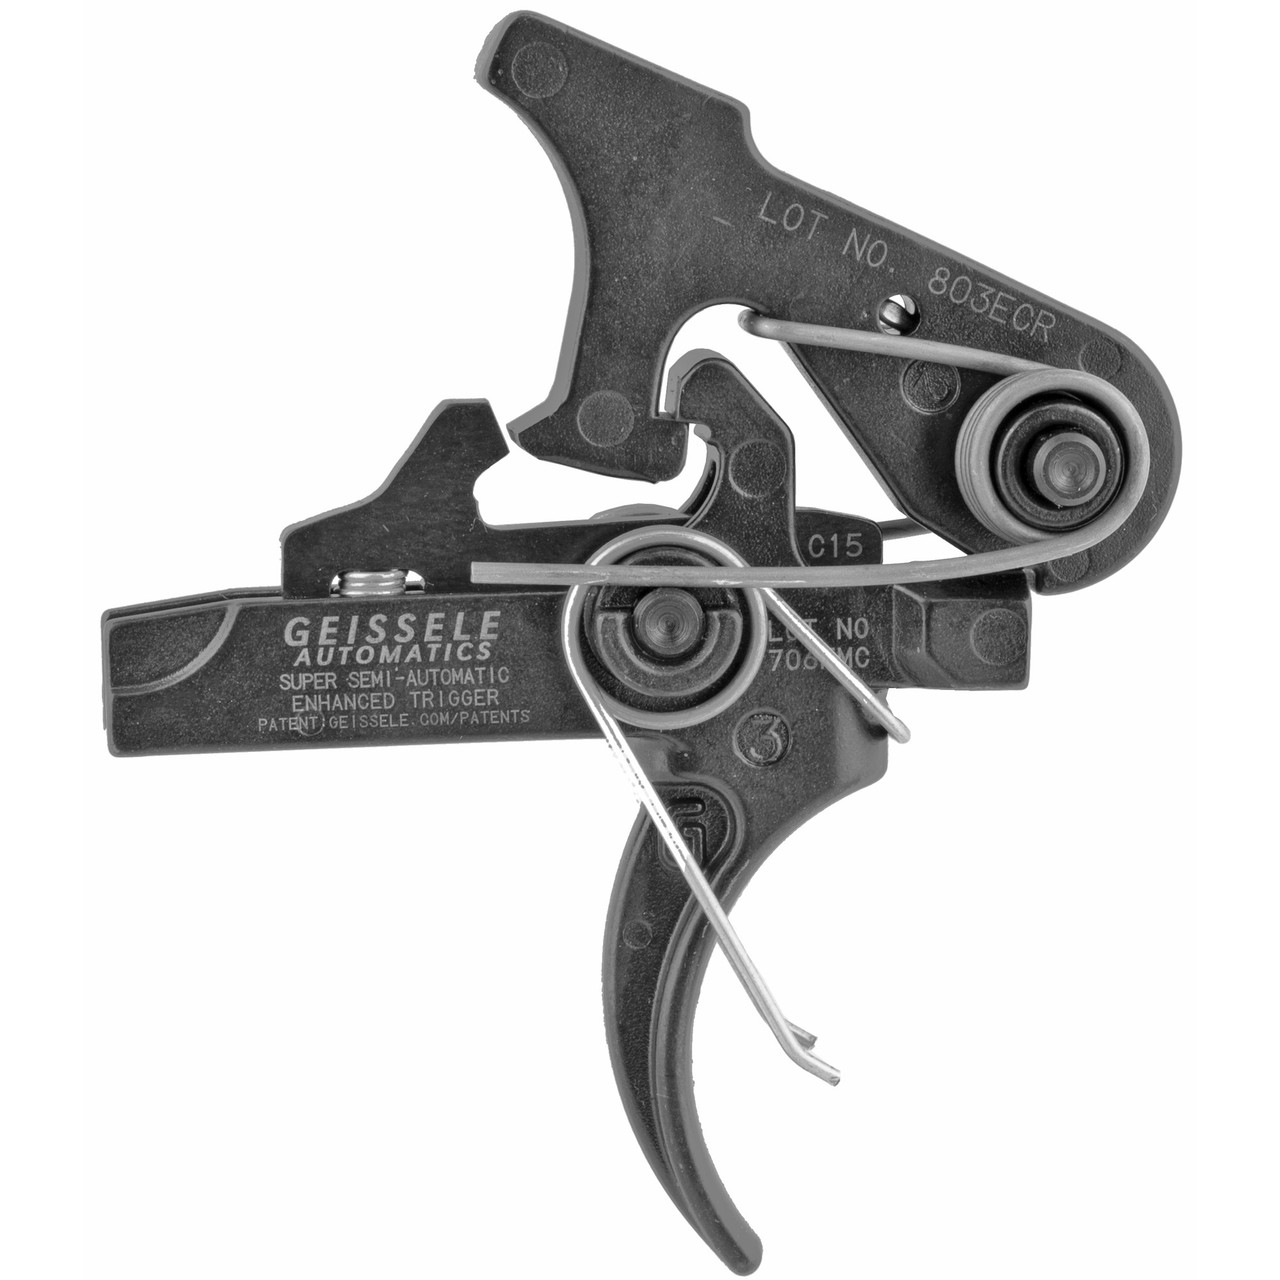 Geissele Automatics, Trigger, Super Semi-Automatic Enhanced